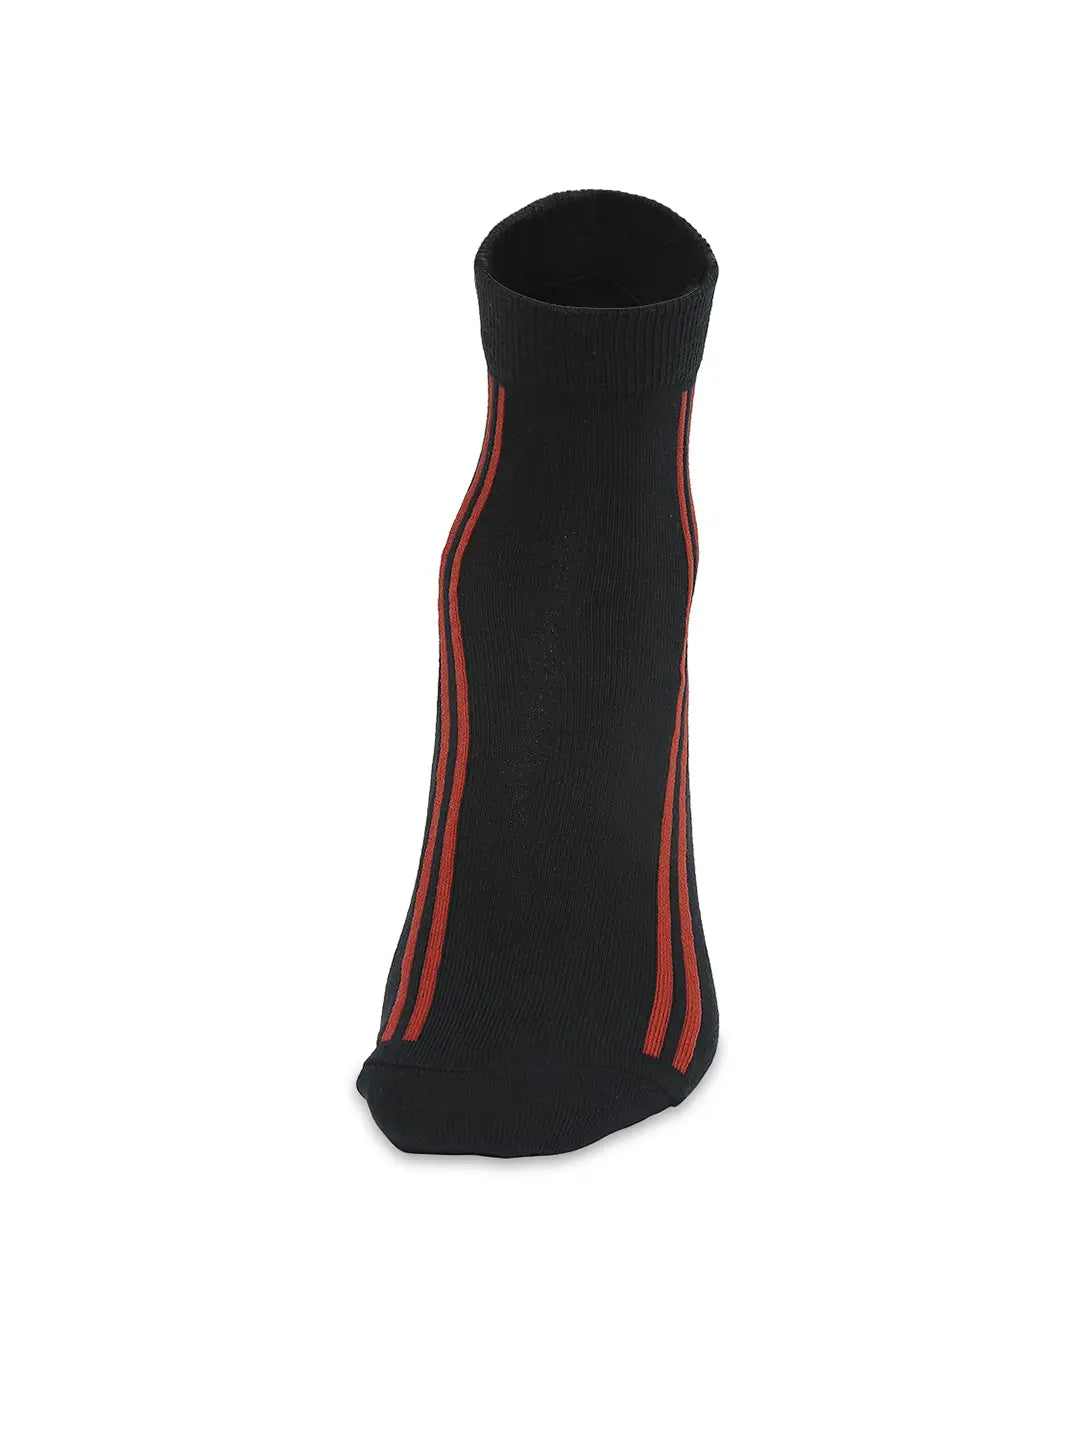 Men Premium Navy & Grey Melange Ankle Length Socks - Pack Of 2- Underjeans by Spykar